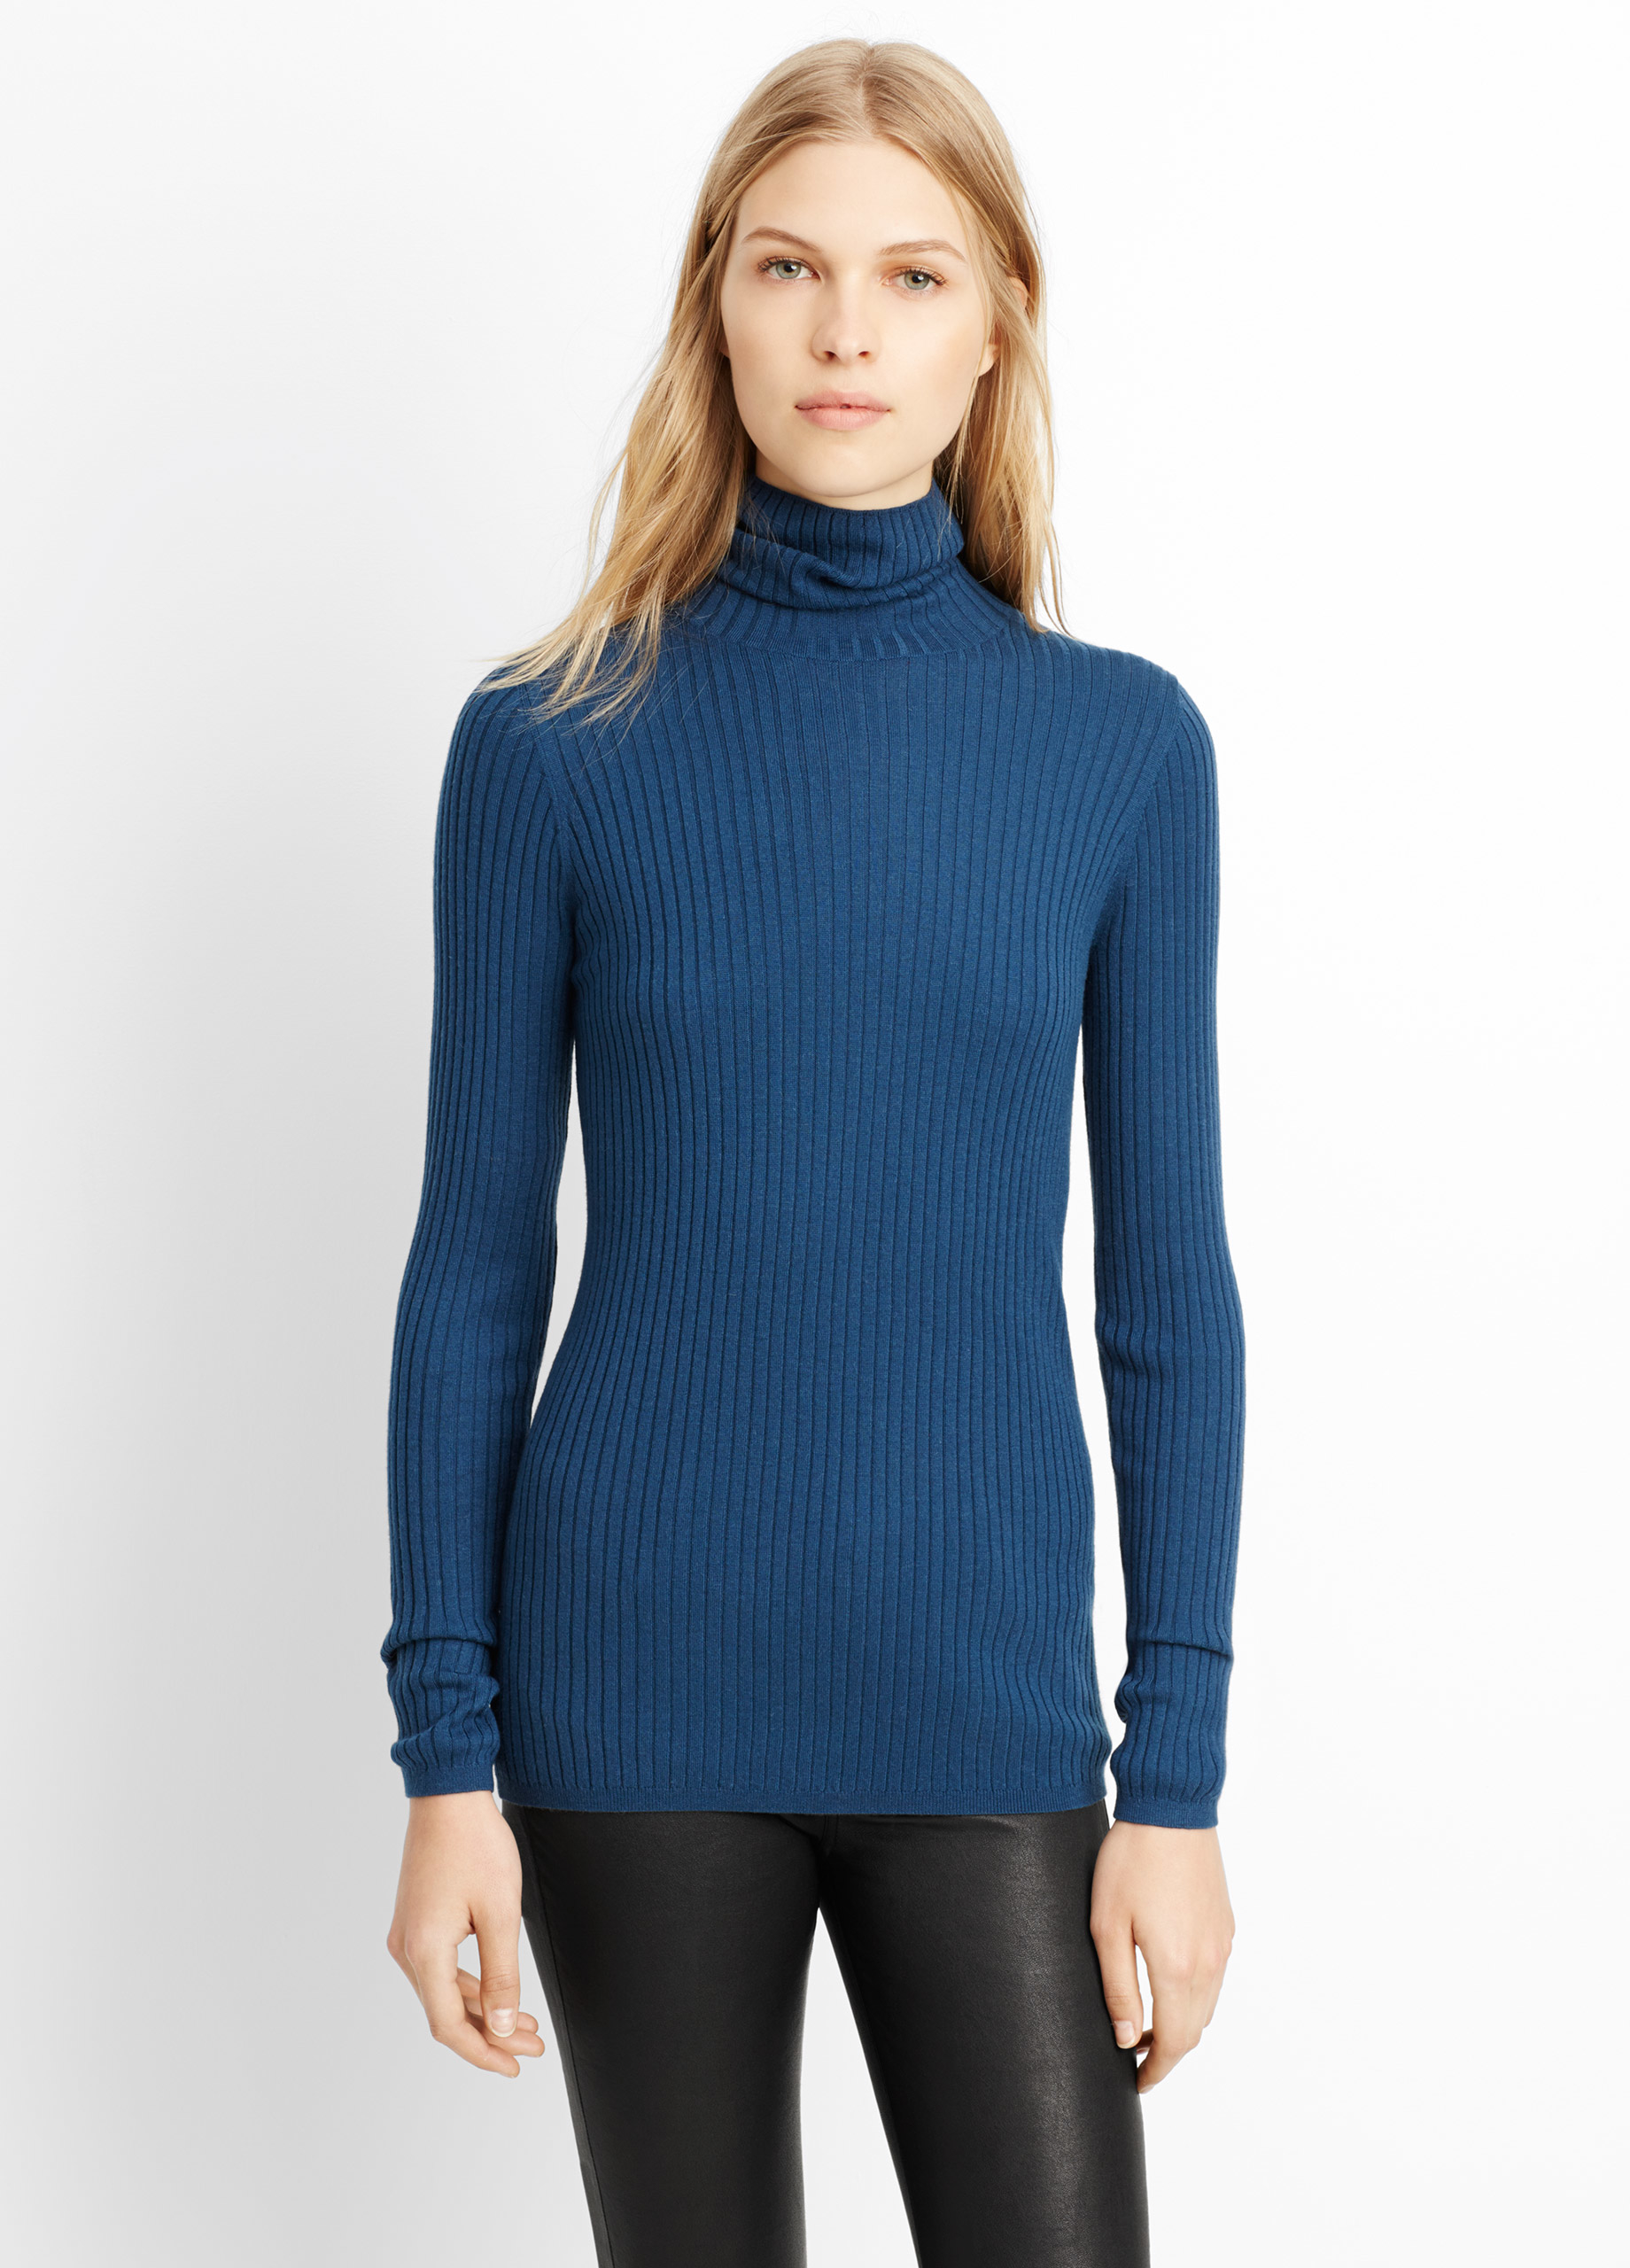 Vince Skinny Rib Turtleneck Sweater in Teal (Blue) - Lyst